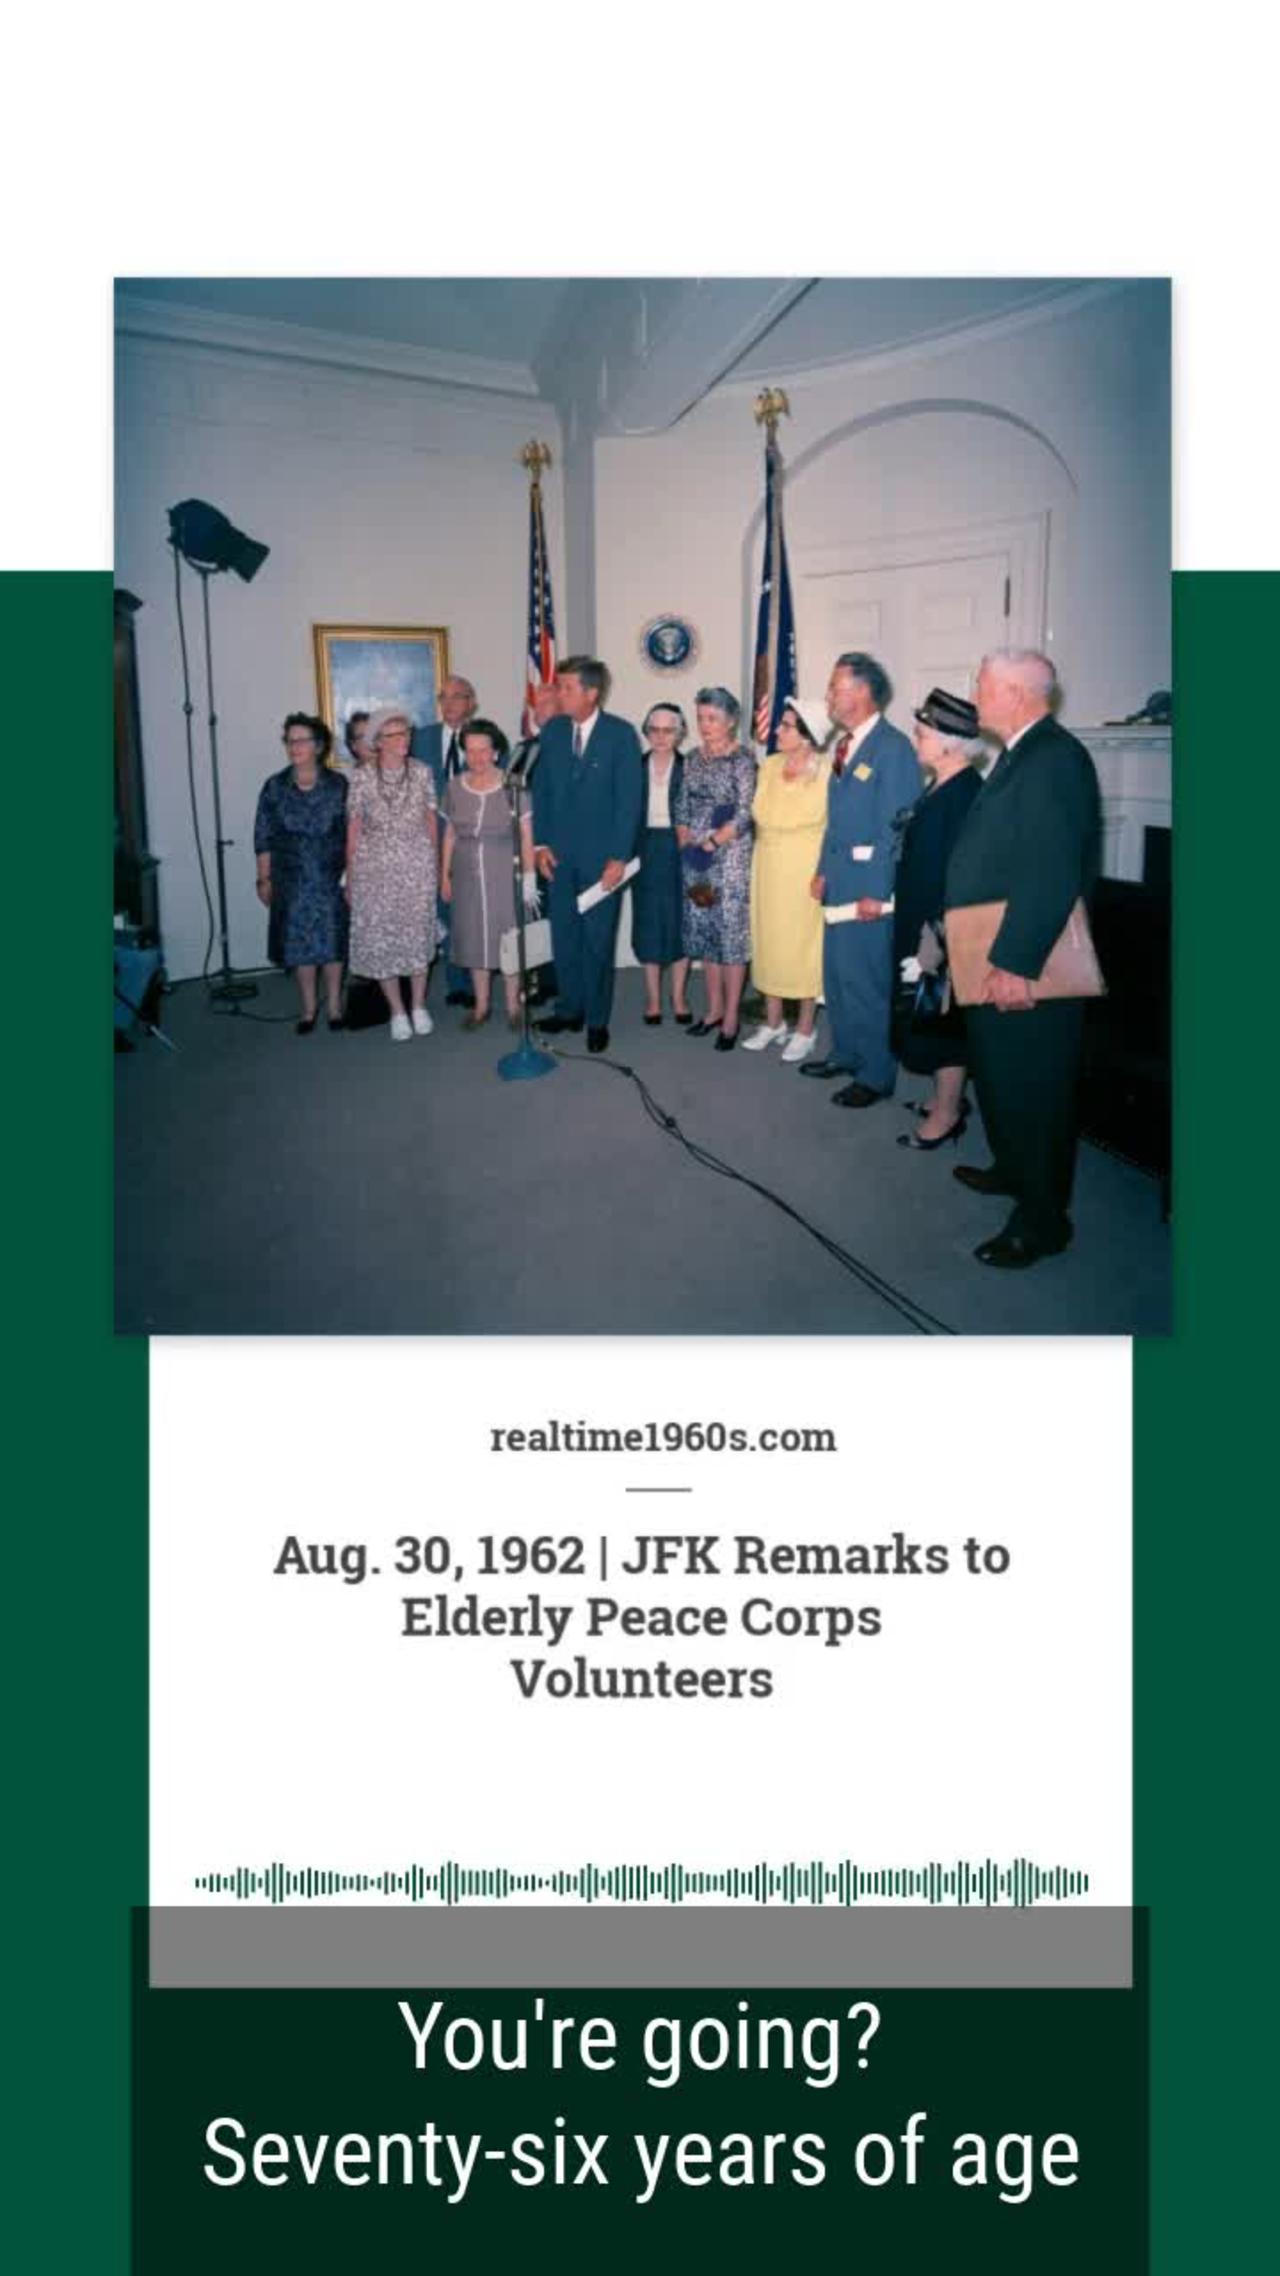 Aug. 30, 1962 - JFK Remarks to Elderly Peace Corps Volunteers